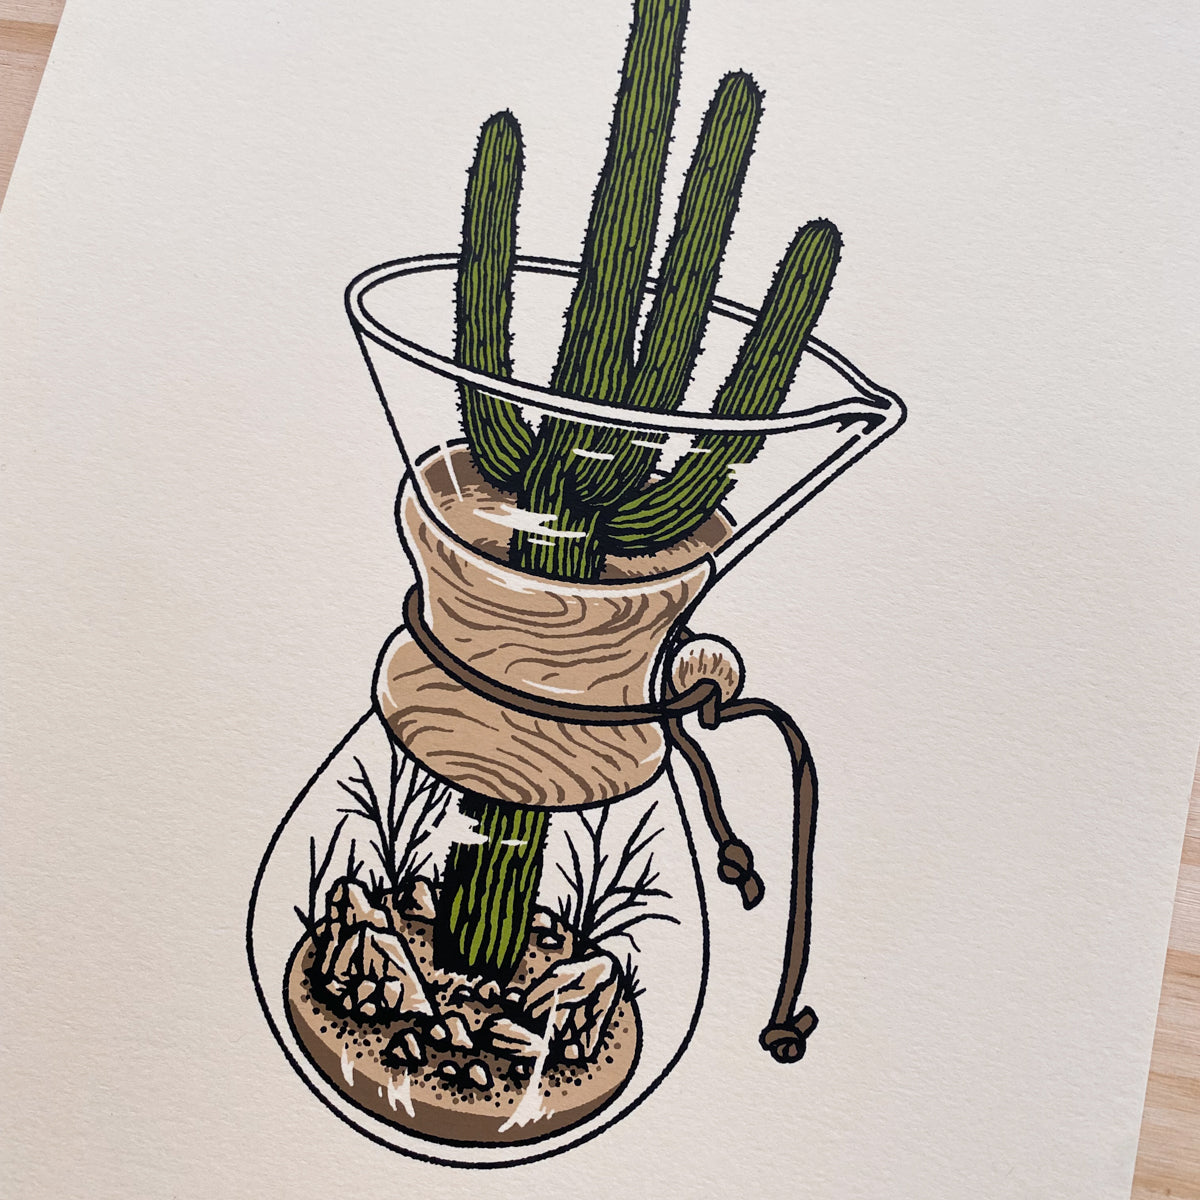 Chemex Cactus - 8x10in Print #390